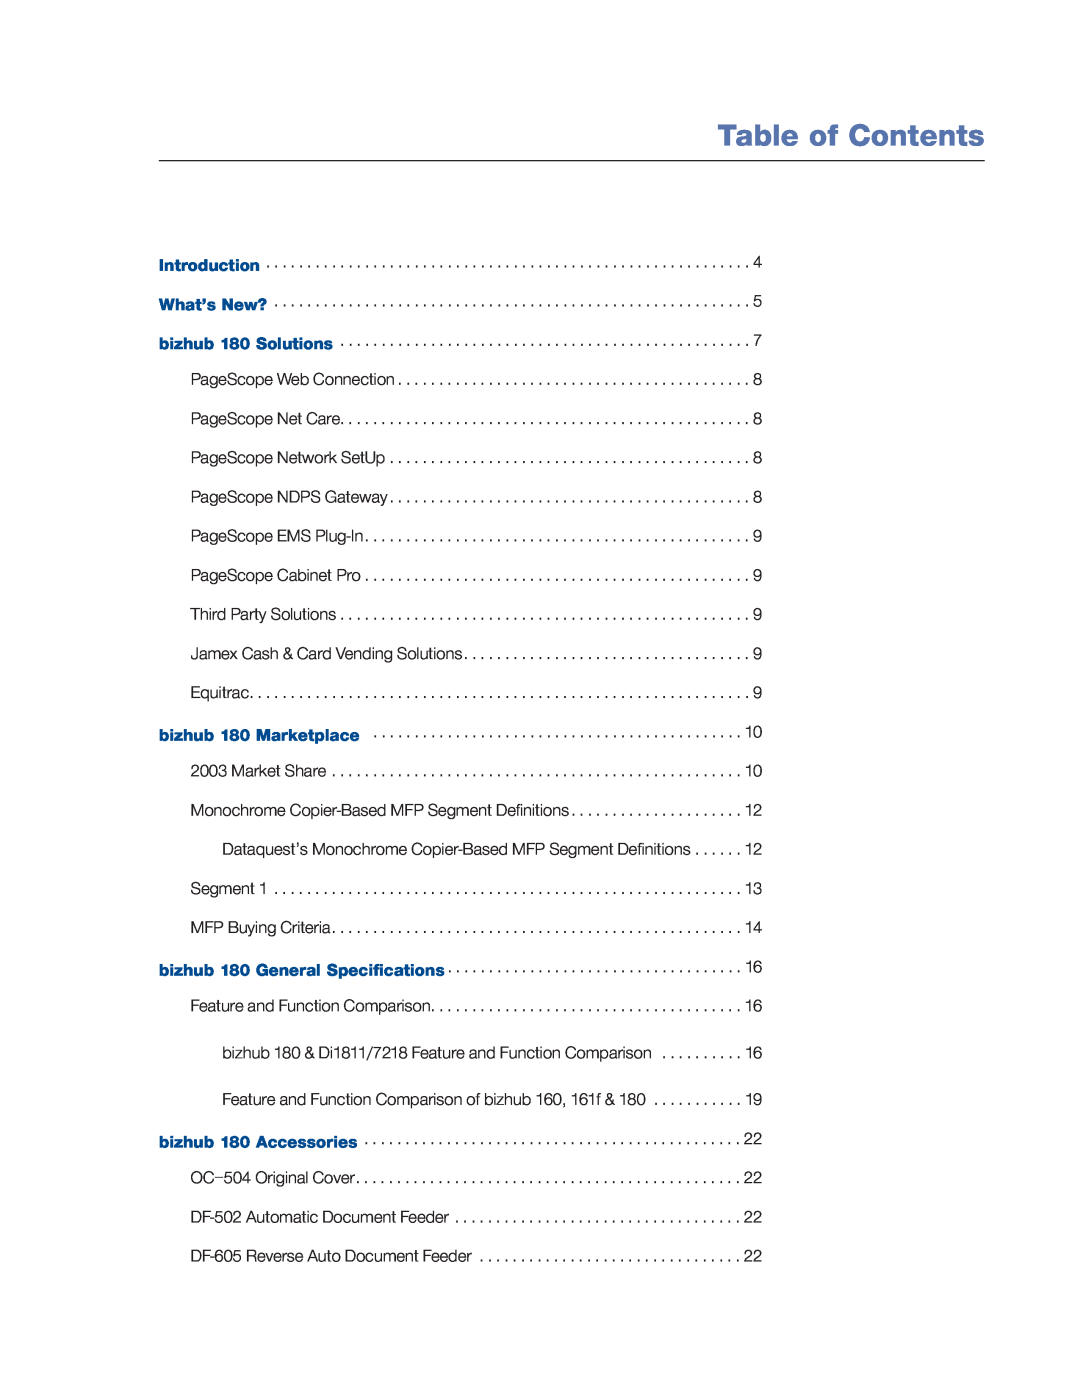 Konica Minolta manual Table of Contents, bizhub 180 & Di1811/7218 Feature and Function Comparison 